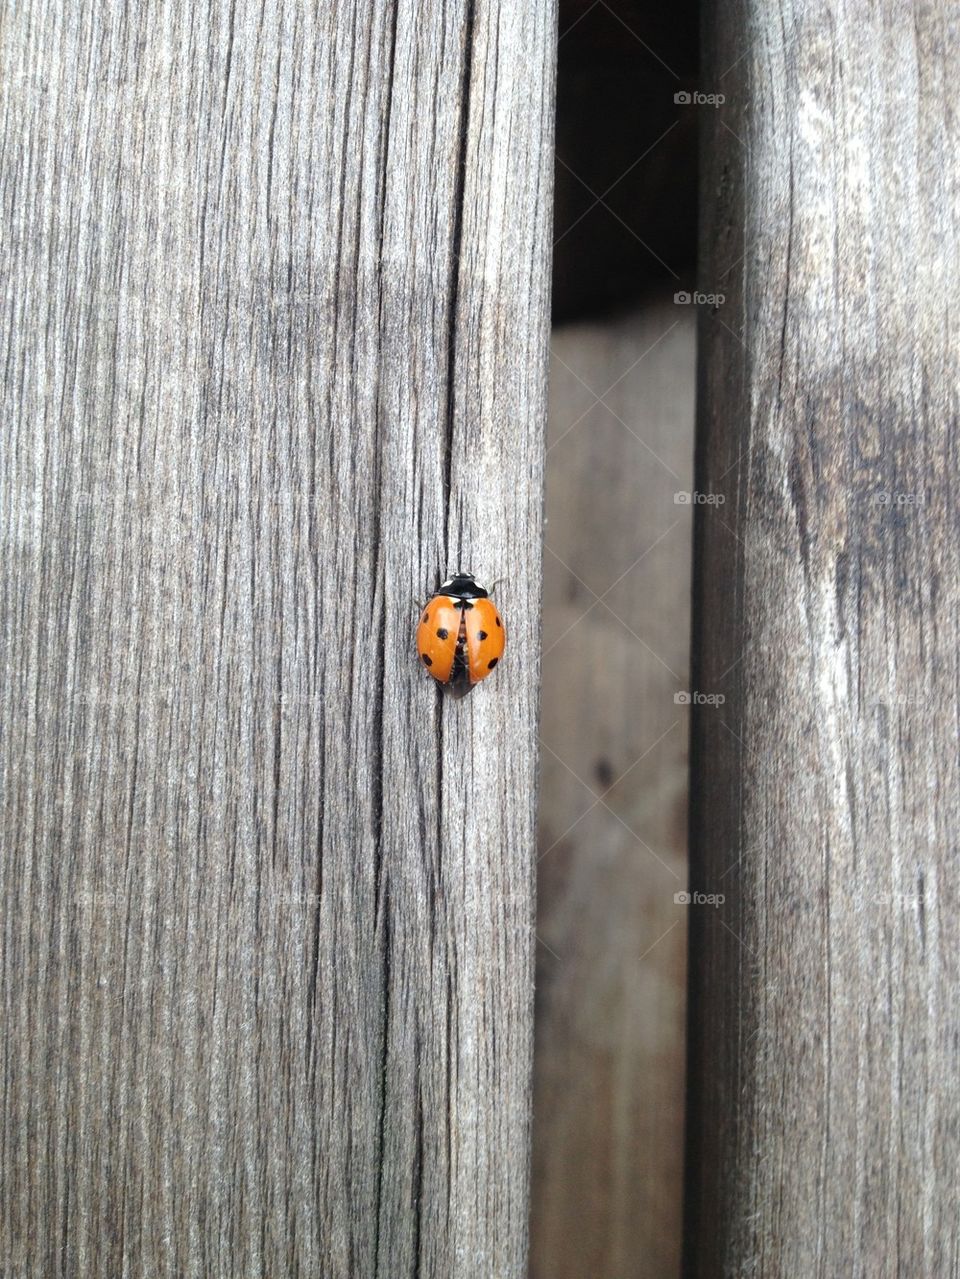 Ladybug on wooden